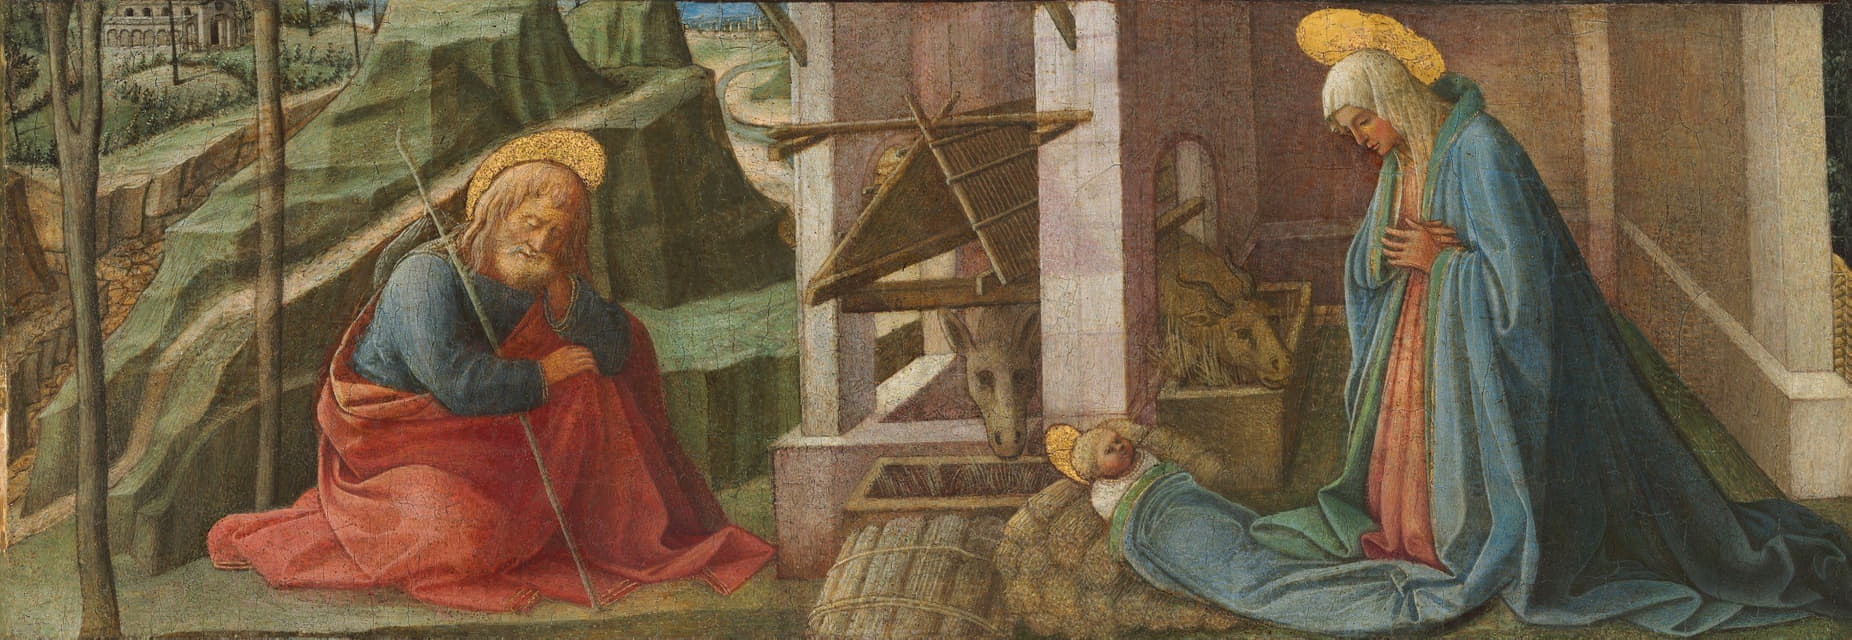 Fra Filippo Lippi and Workshop - The Nativity